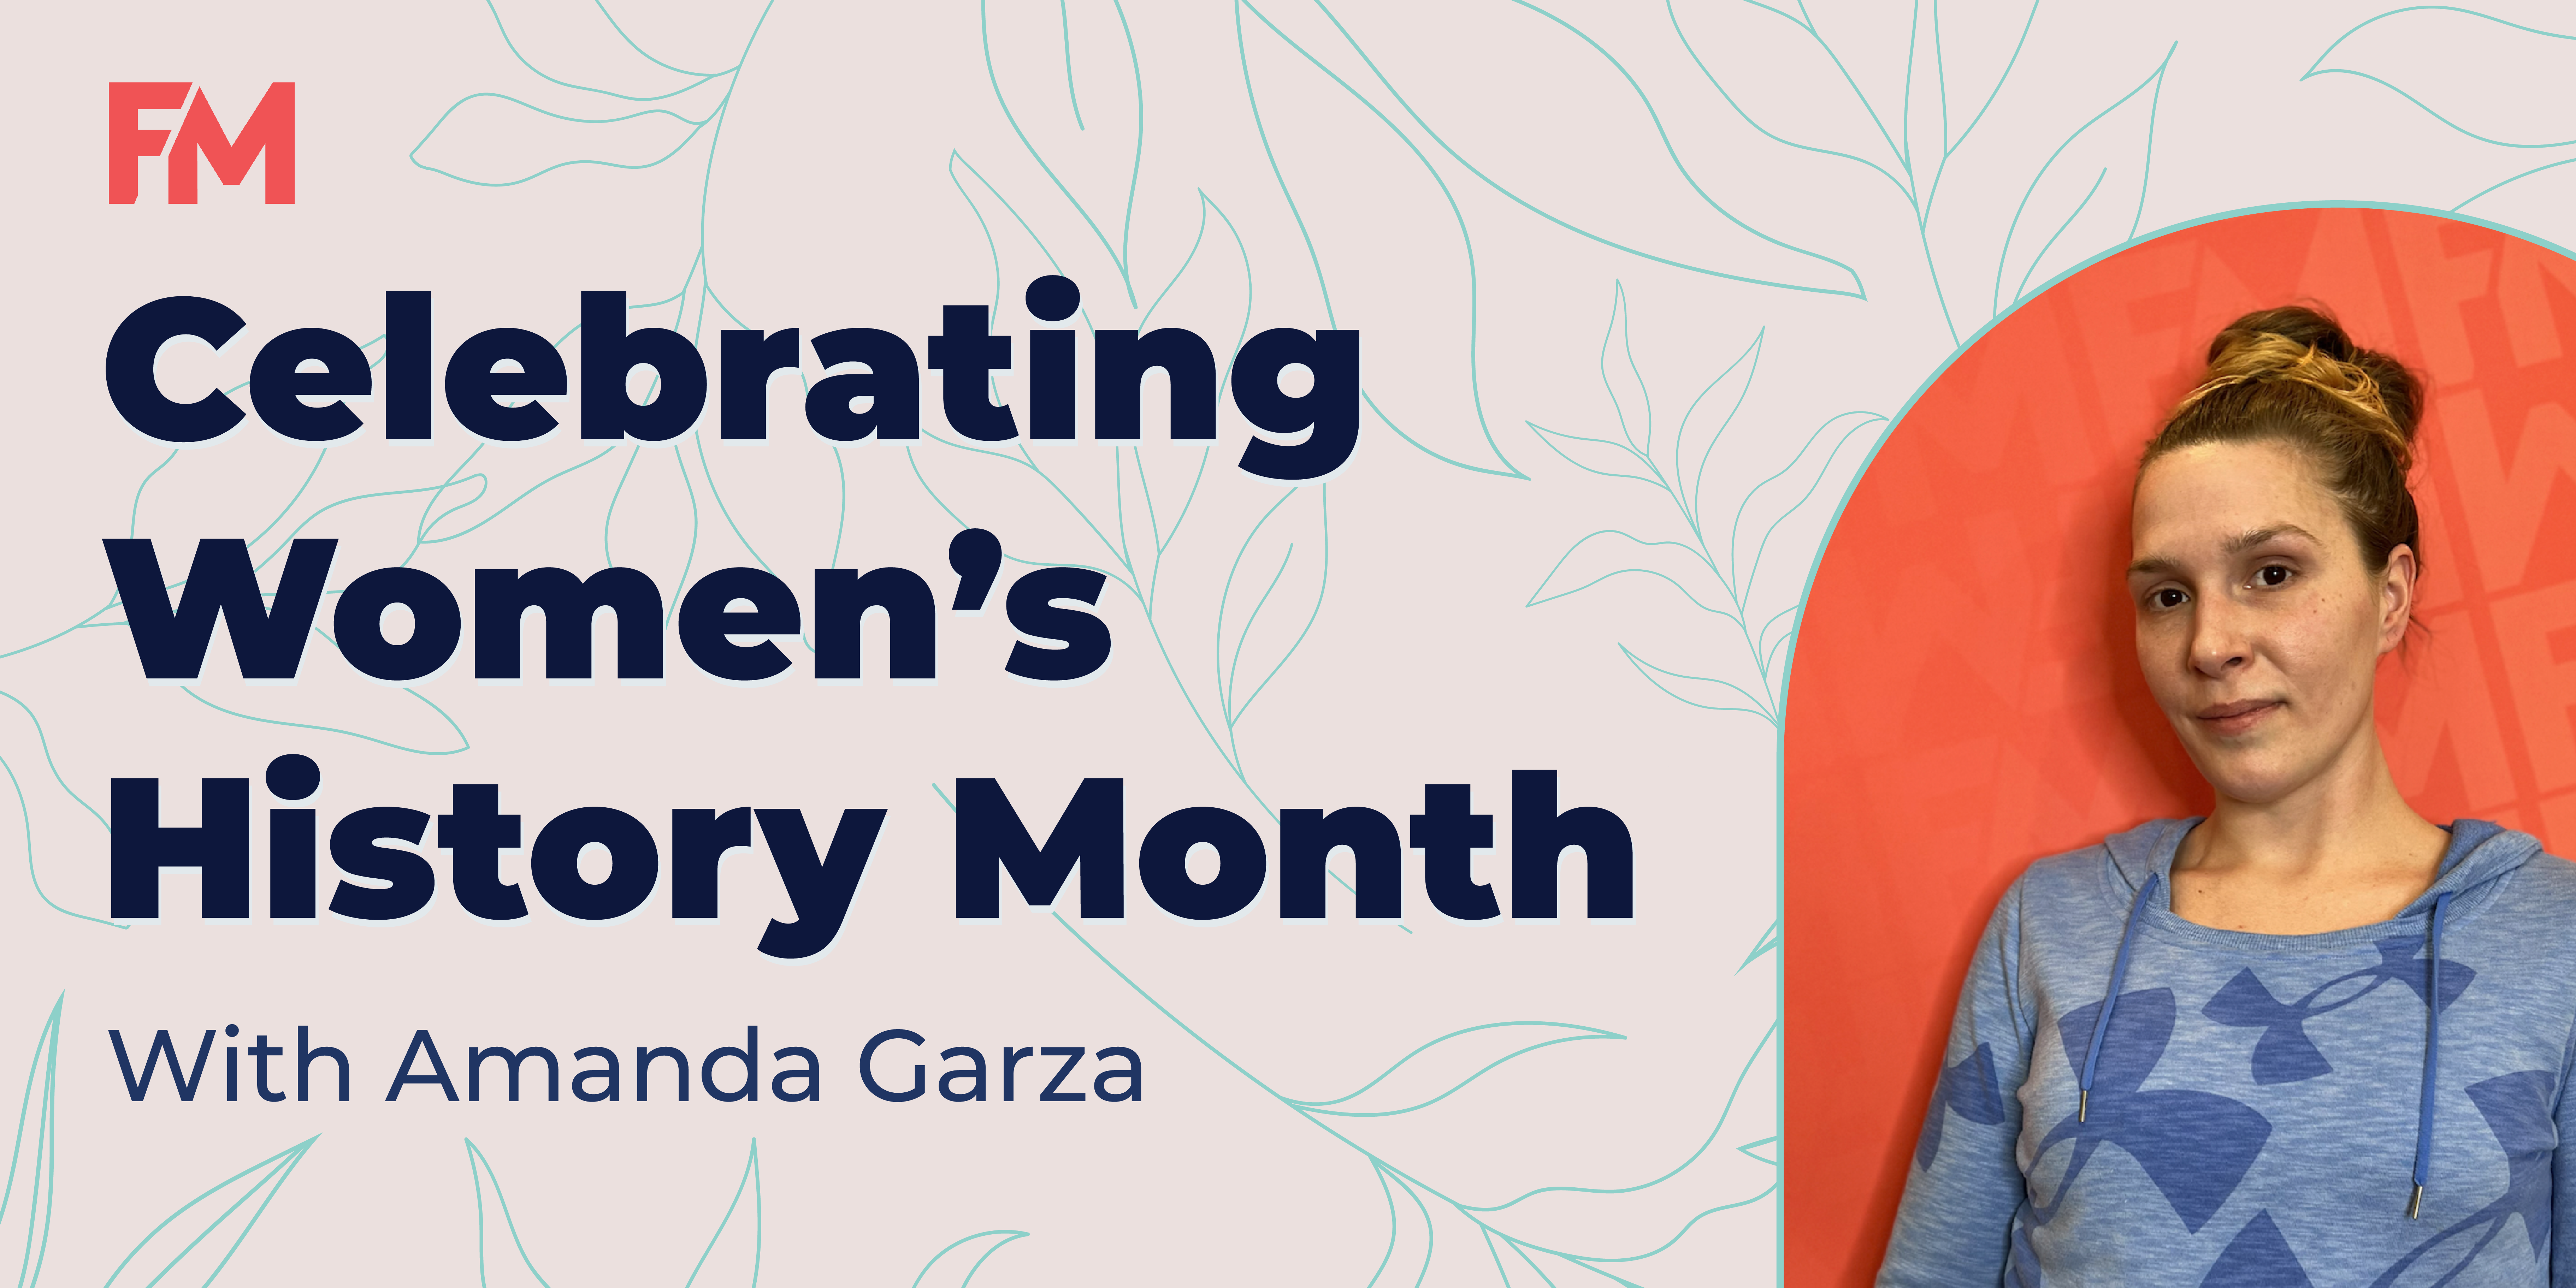 Women's History Month - Amanda Garza